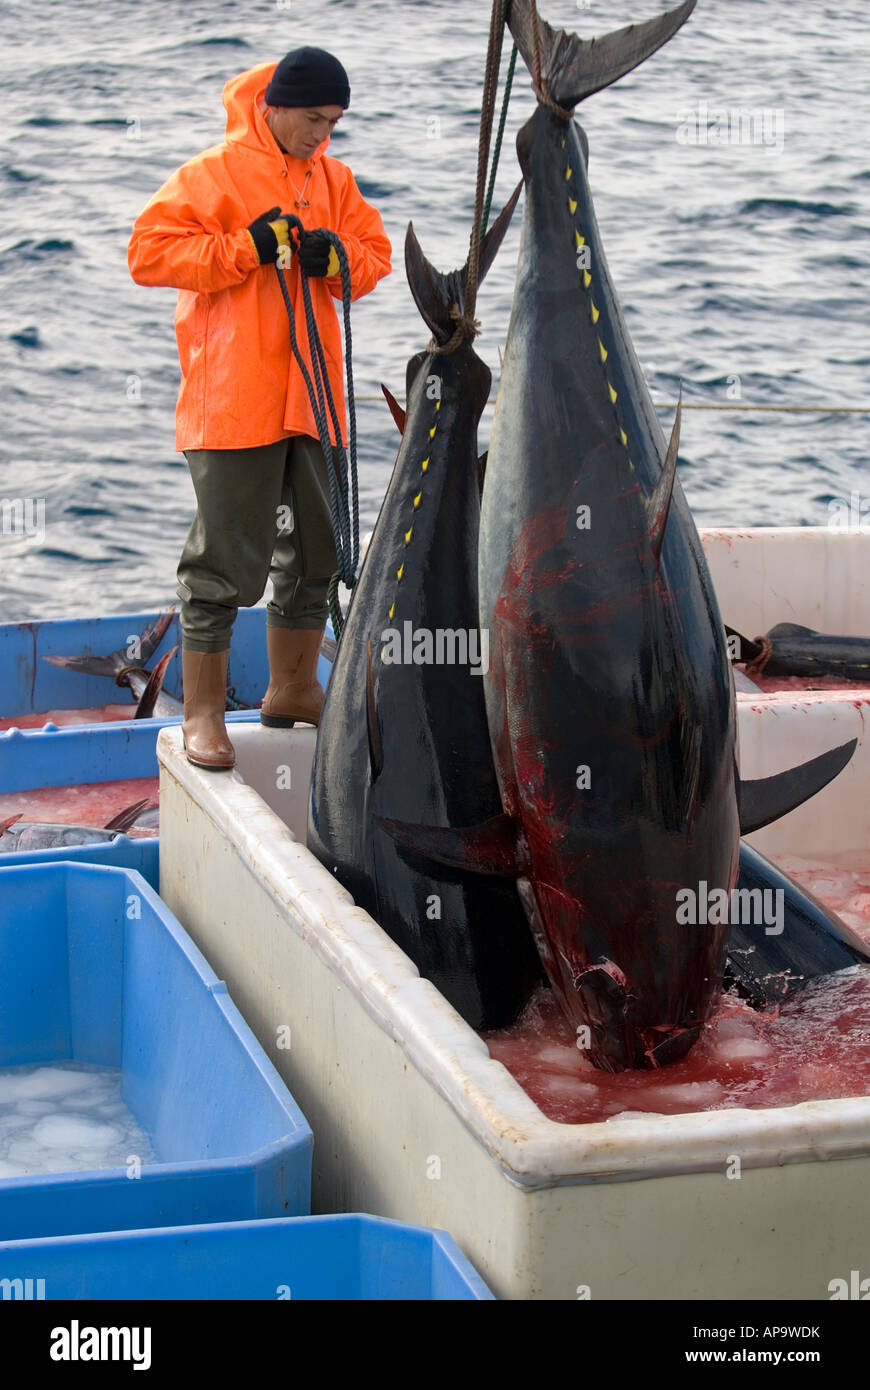 8,634 Tuna Fishing Sea Stock Photos - Free & Royalty-Free Stock